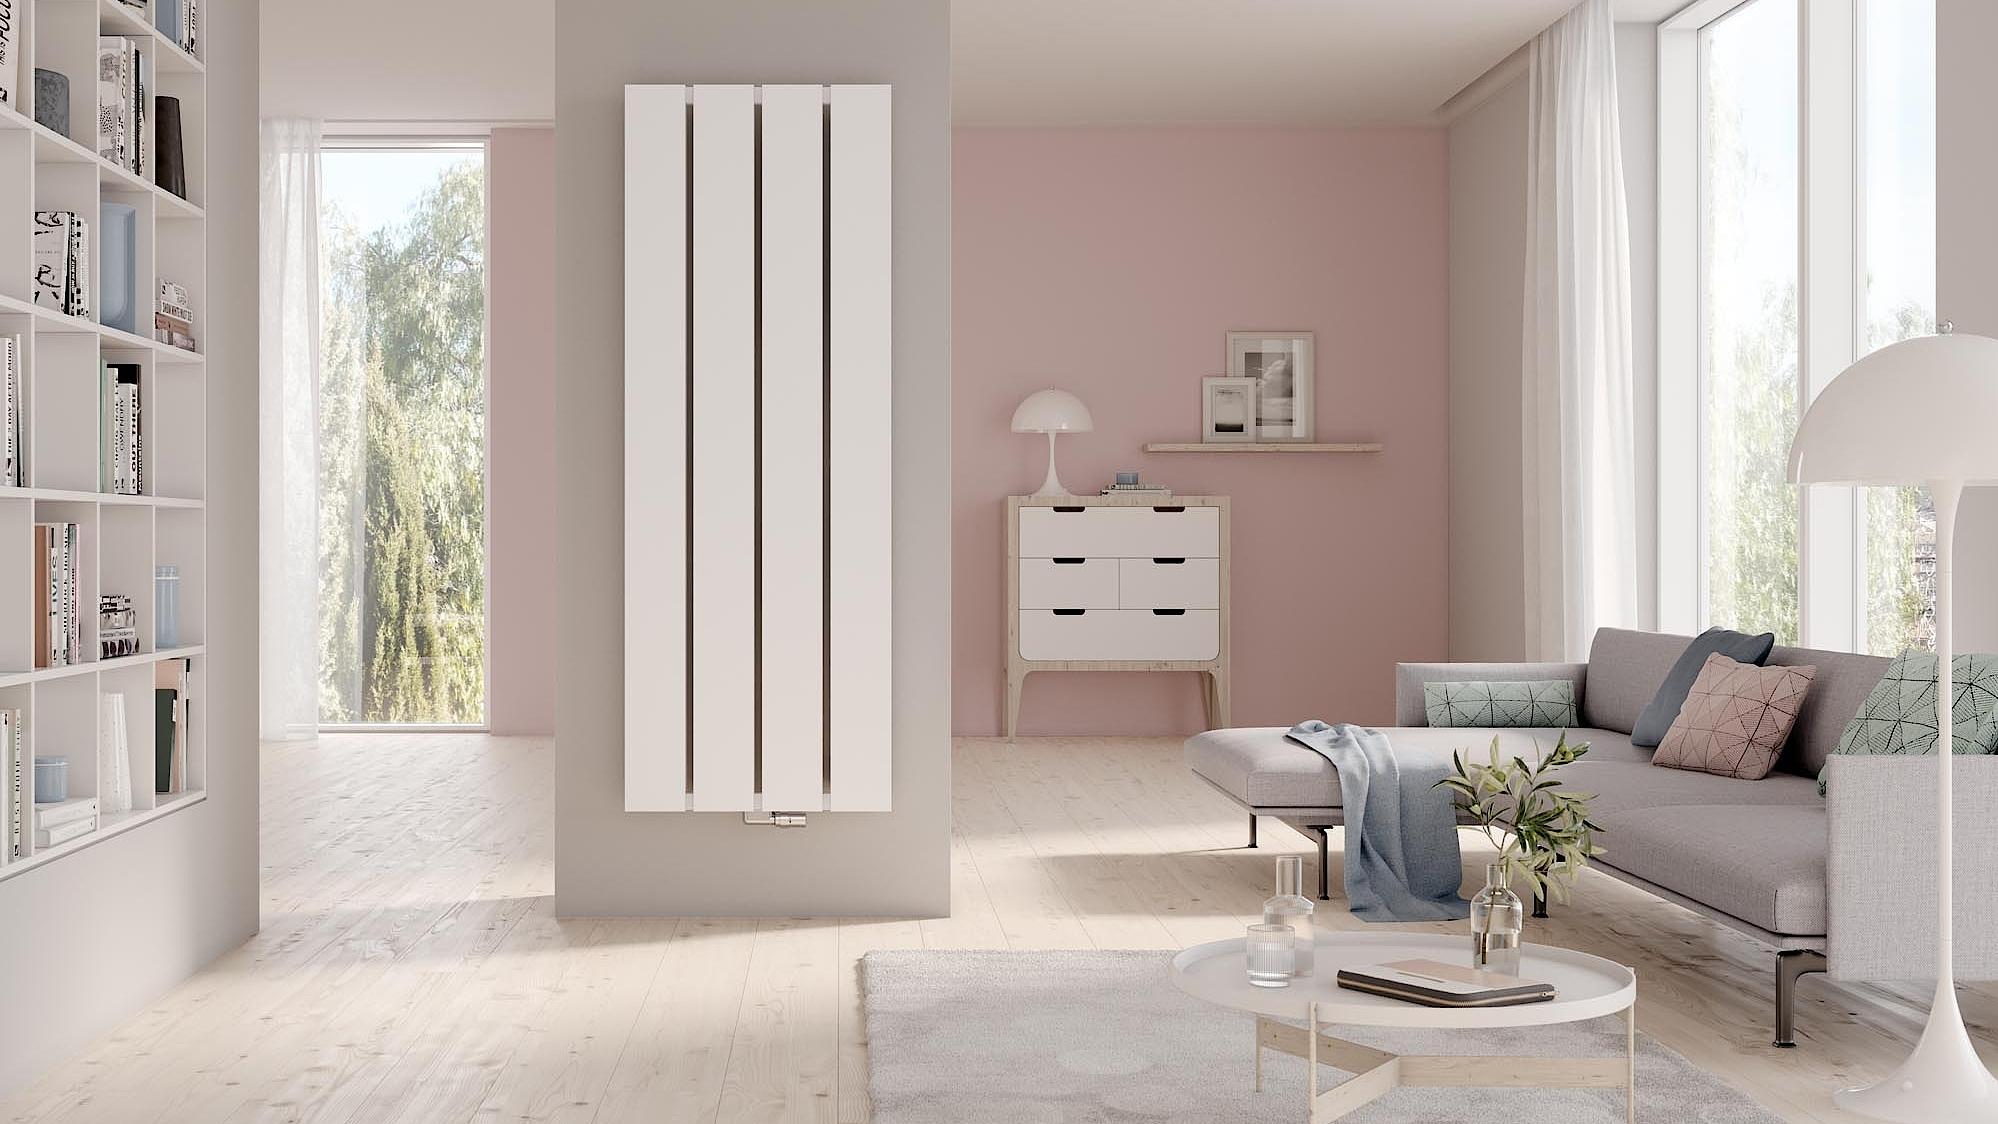 The Kermi Decor-Arte Plan designer and bathroom radiator will thrill you with its modern and minimalist design.